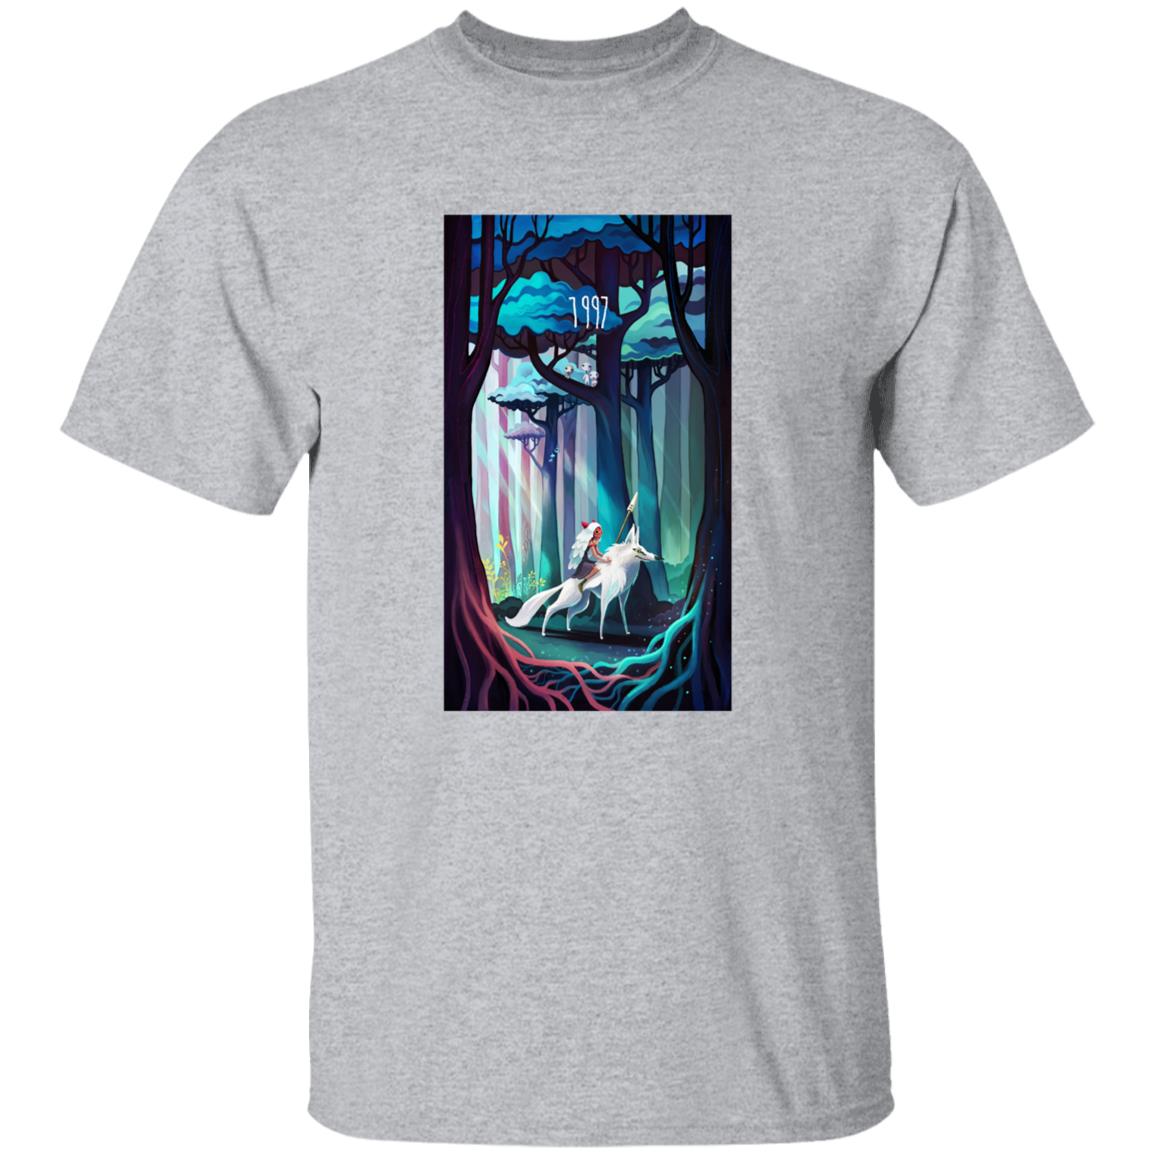 Princess Mononoke 1997 Illustration T Shirt